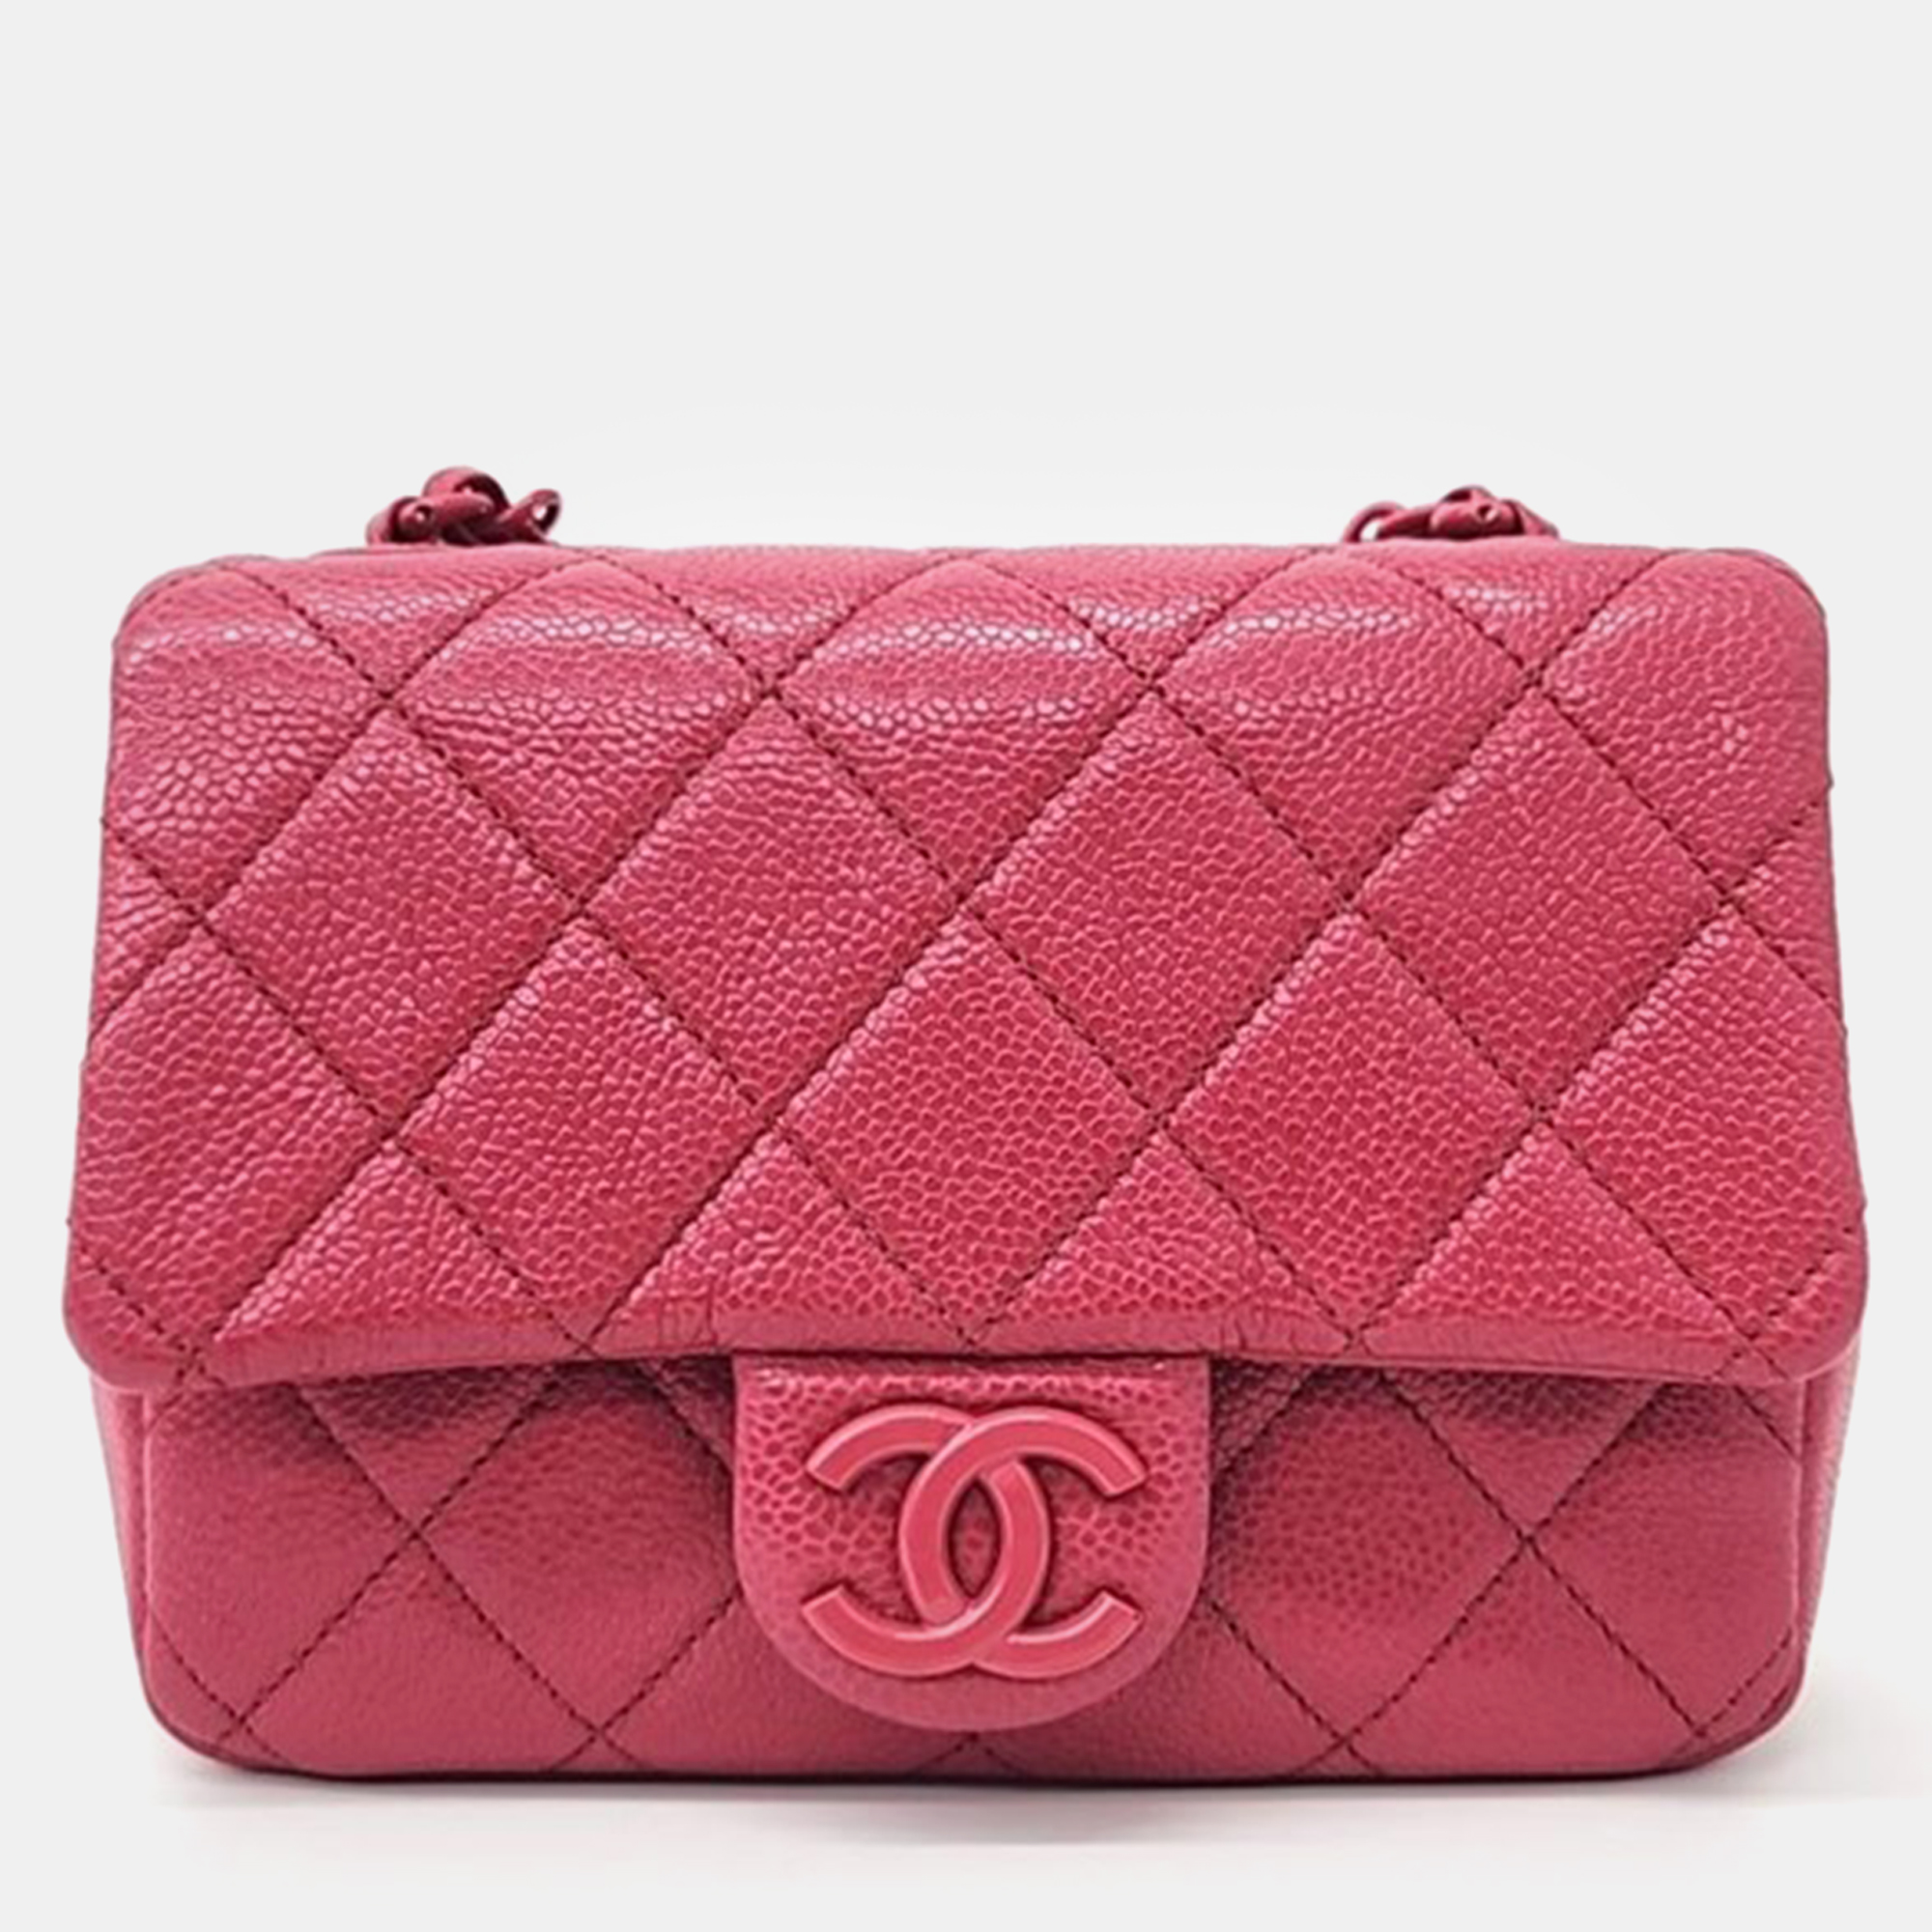 Chanel pink leather classic square mini flap shoulder bag